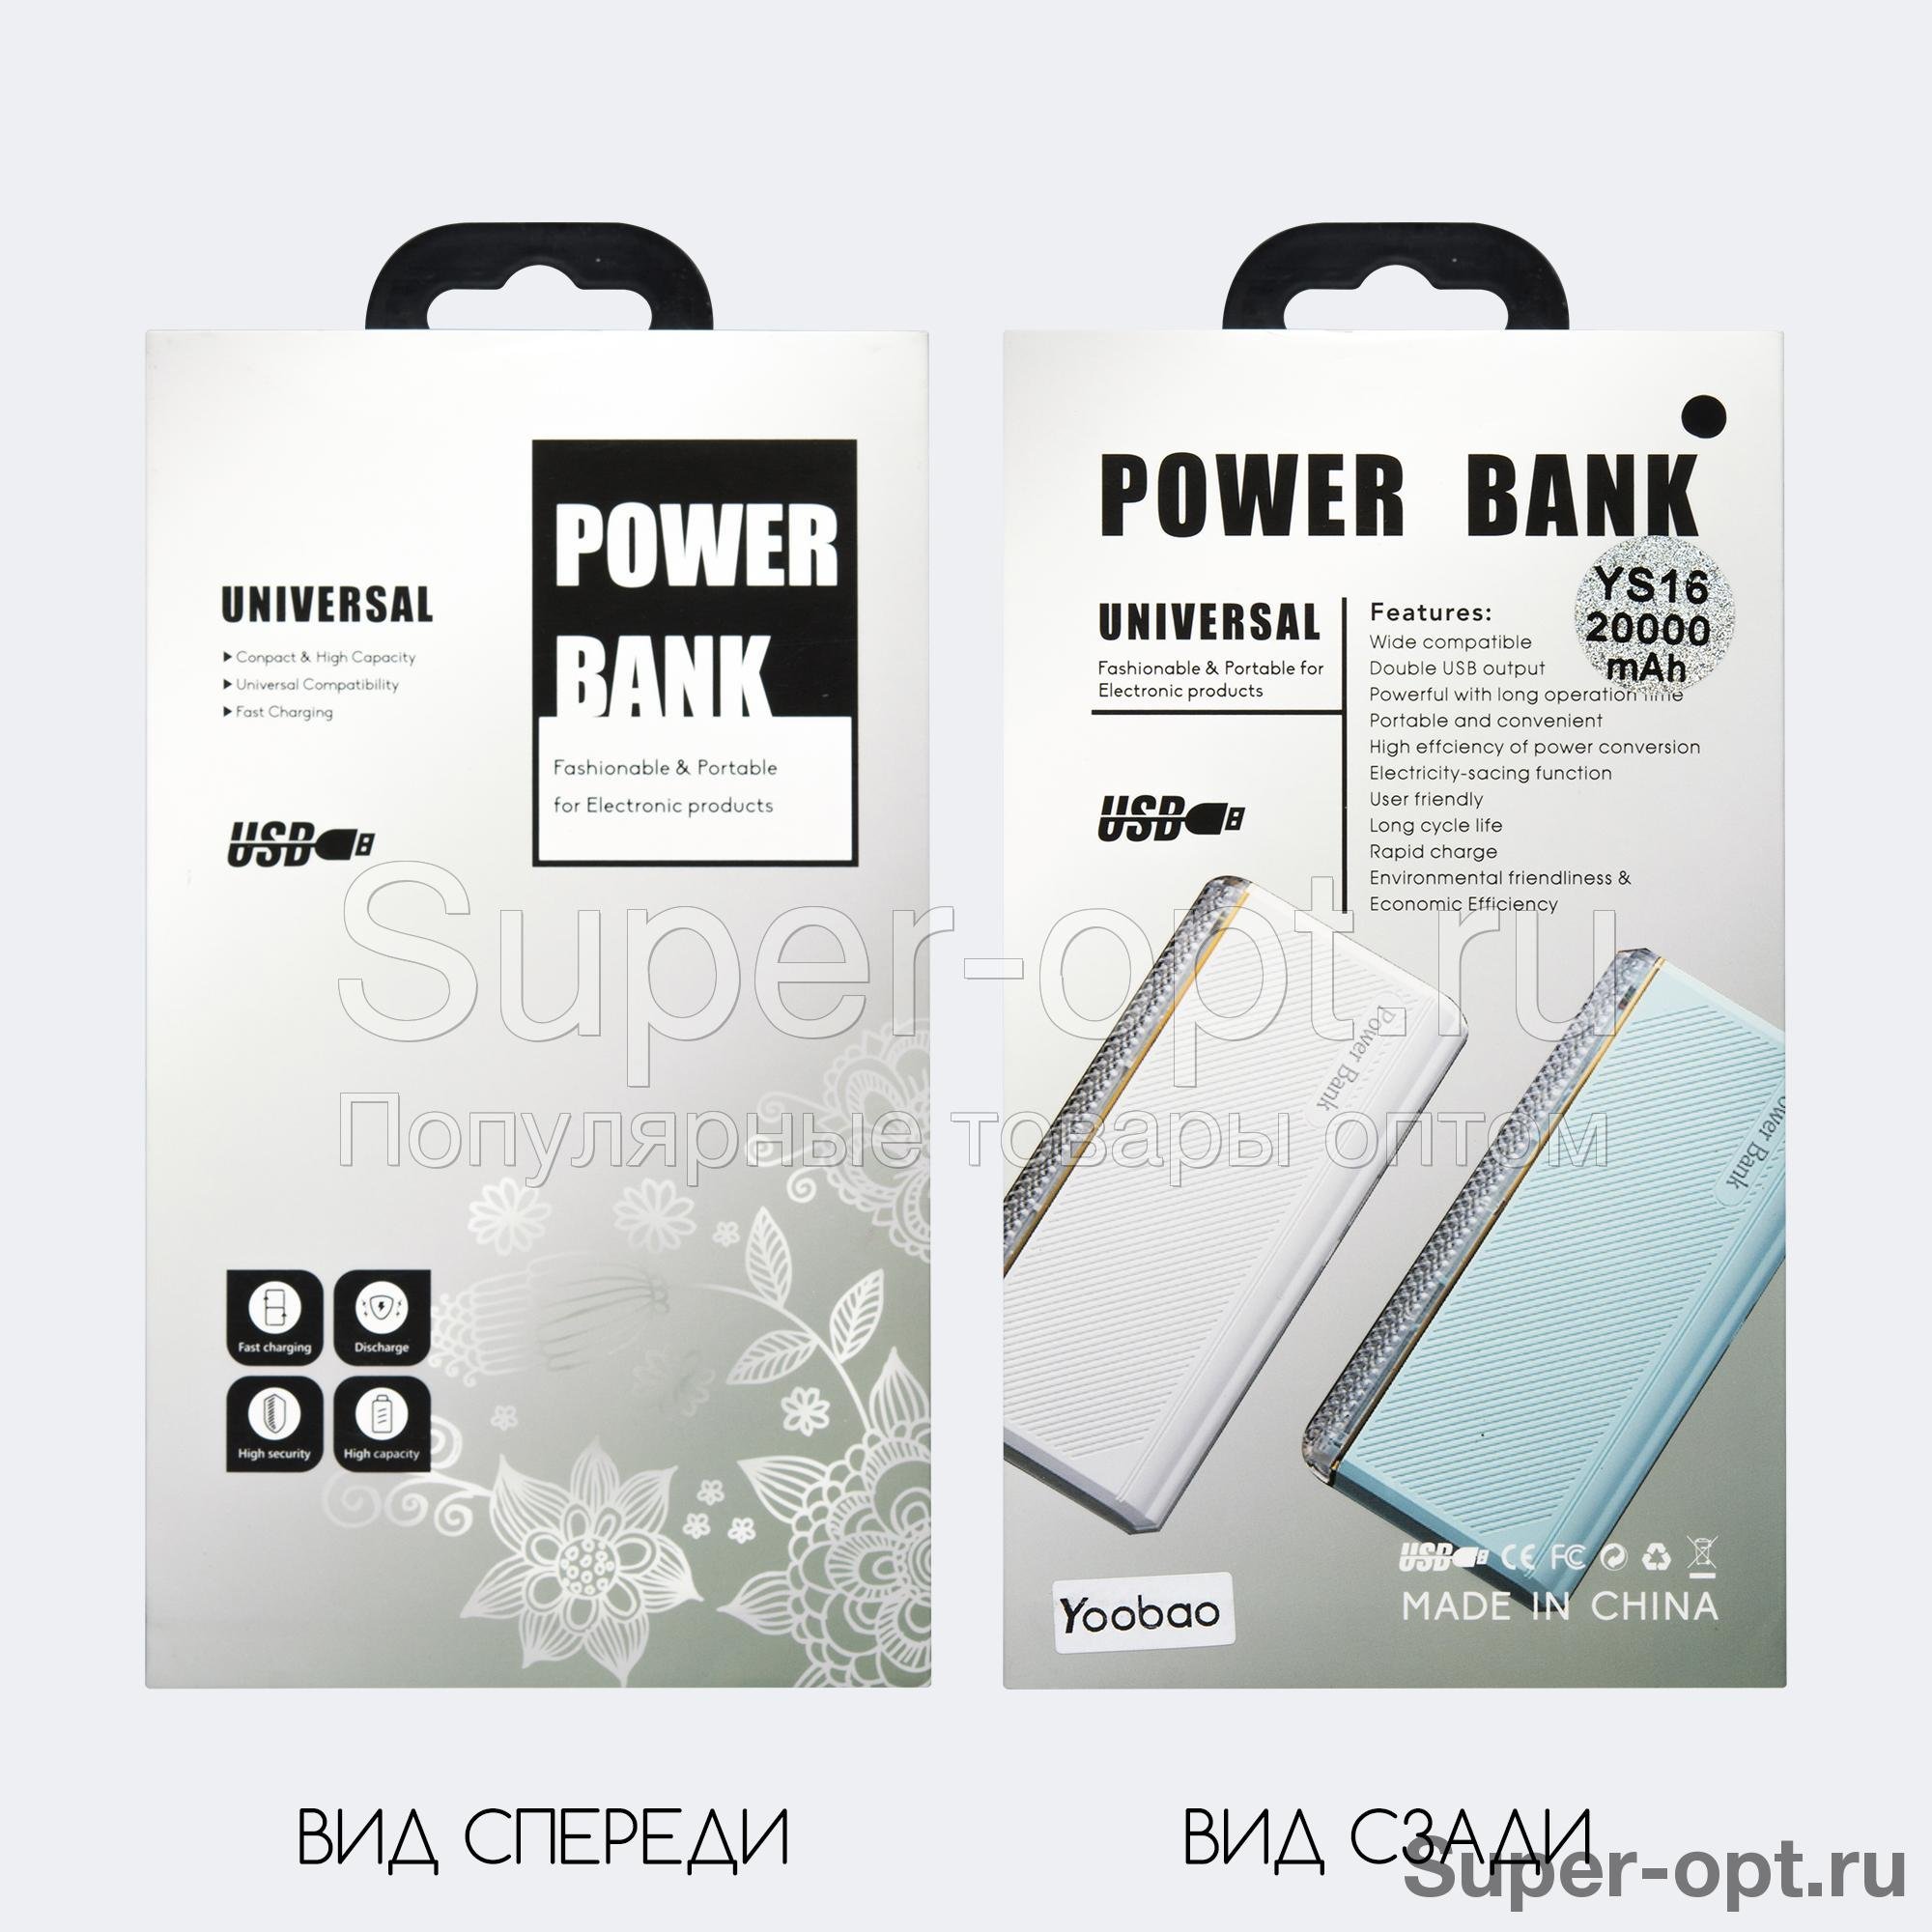 Power Bank Yoobao YS16 20000 mAh